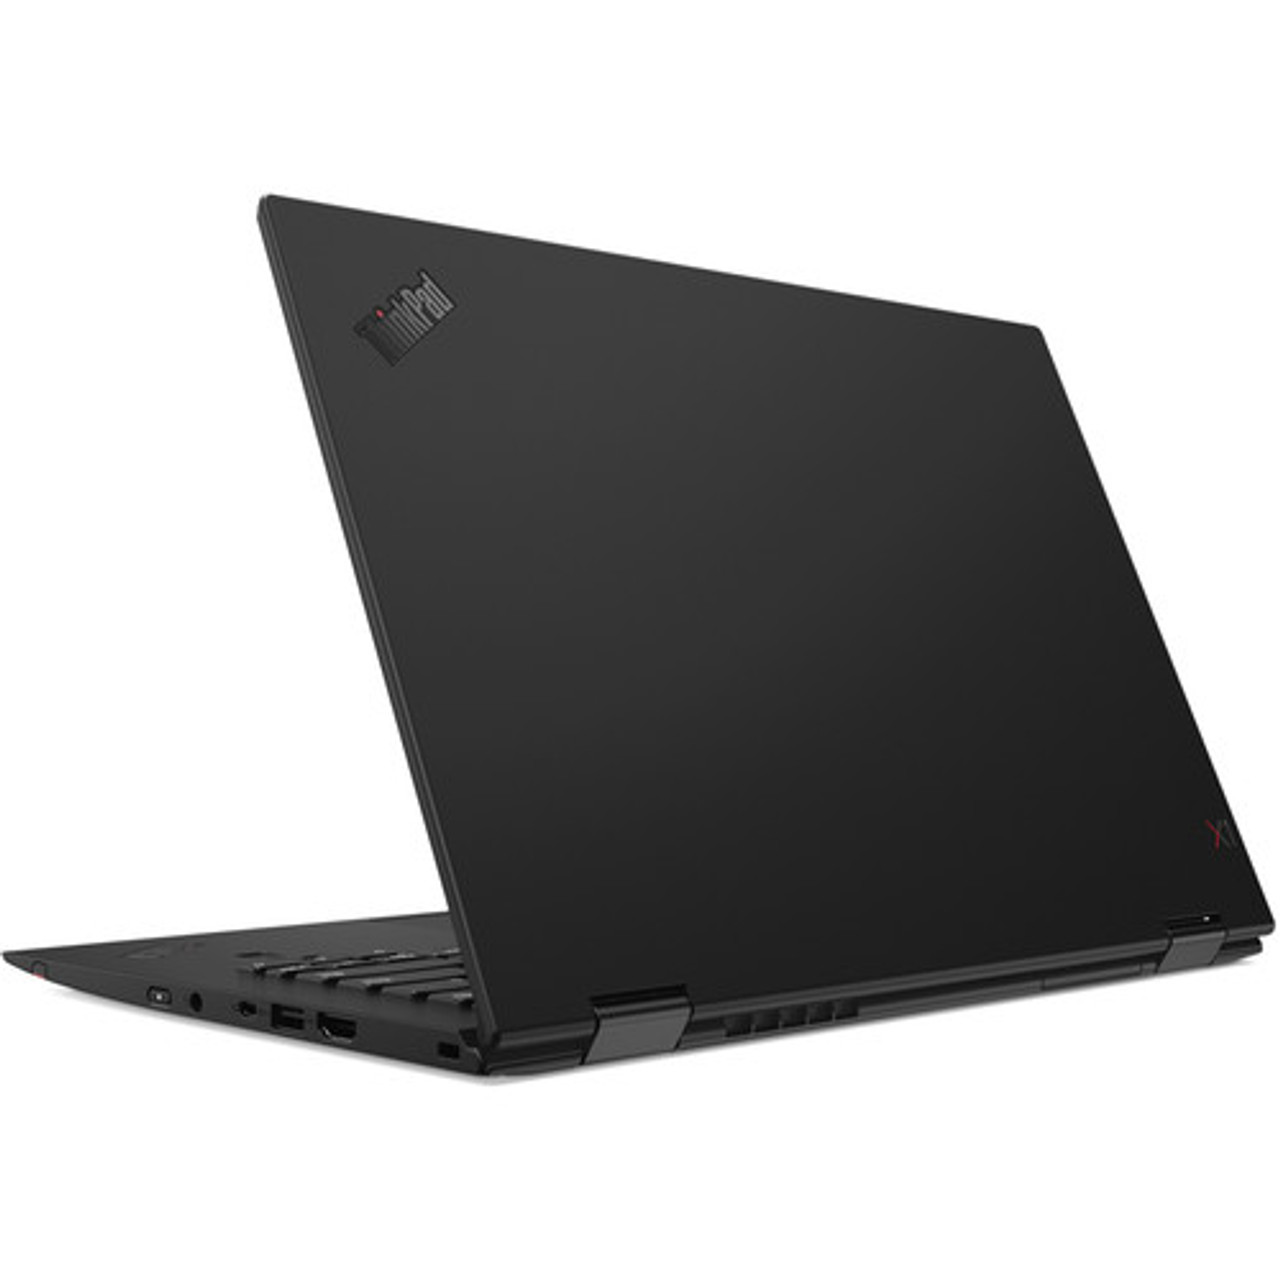 Lenovo Thinkpad X1 Yoga G1 14" Laptop Intel Core i5 8GB 256GB SSD W10P Touch | Refurbished